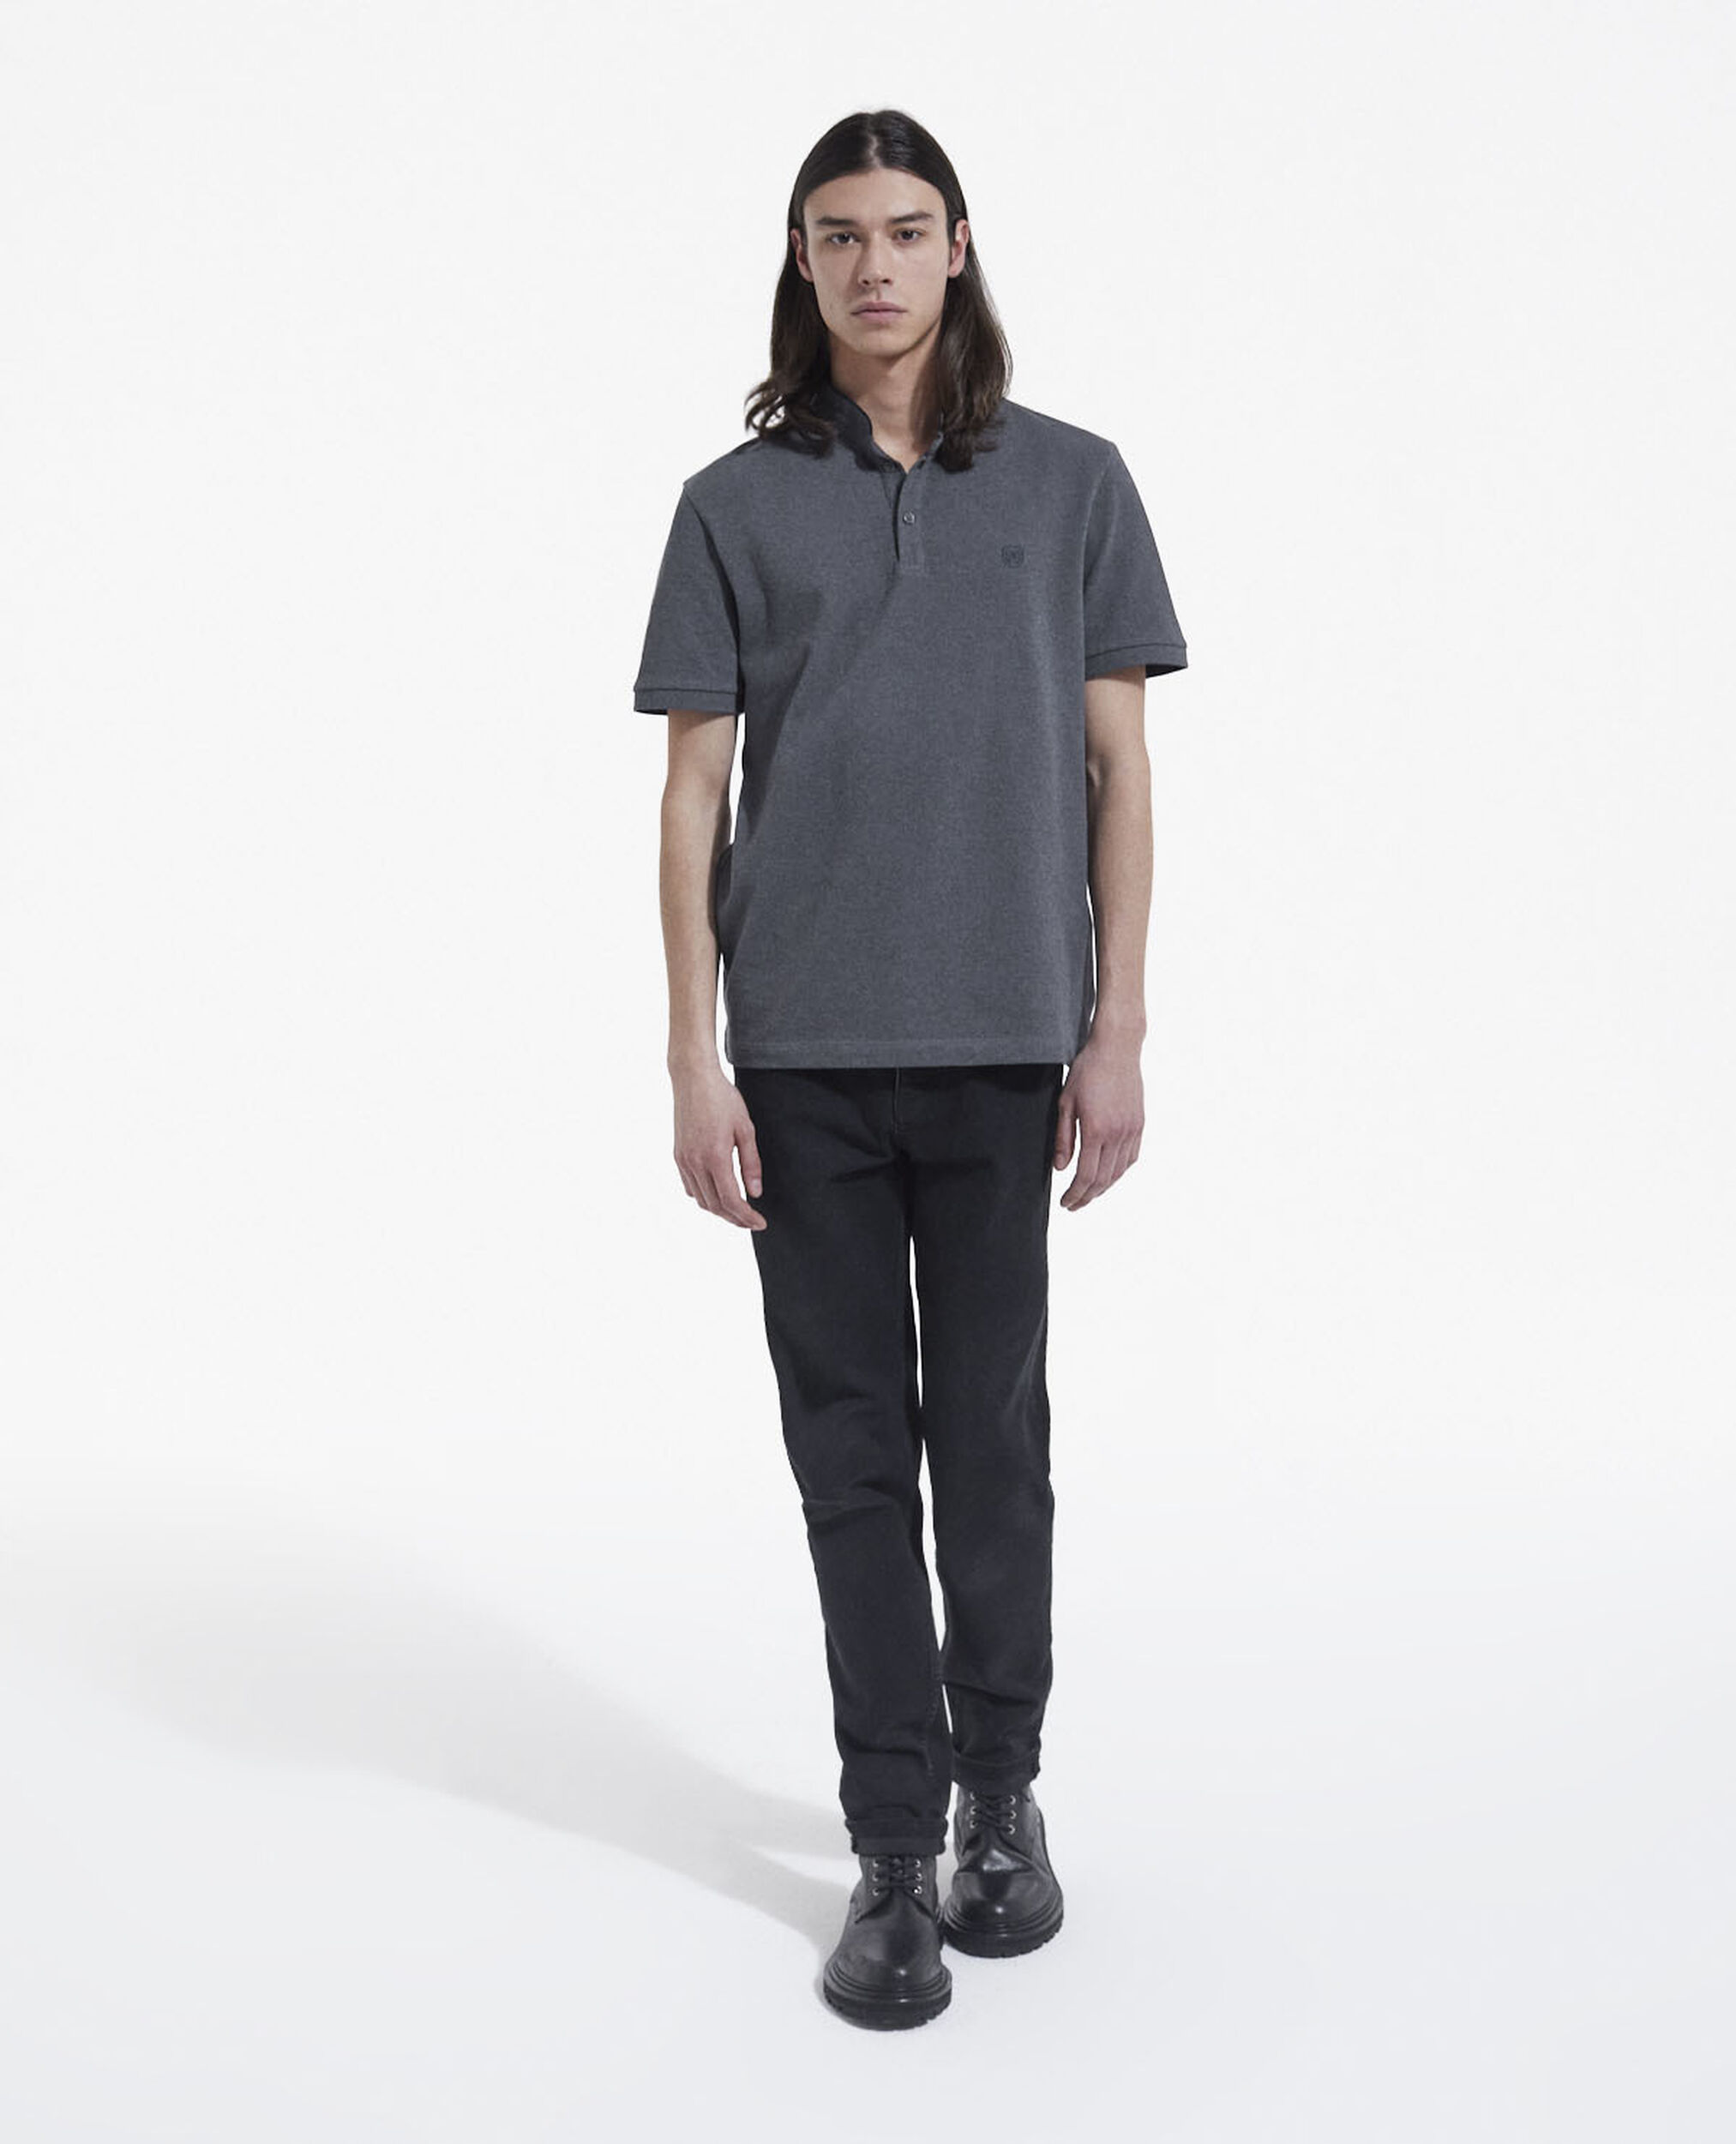 Camisa polo gris oscuro algodón Mao bordado, GREY-NAVY, hi-res image number null